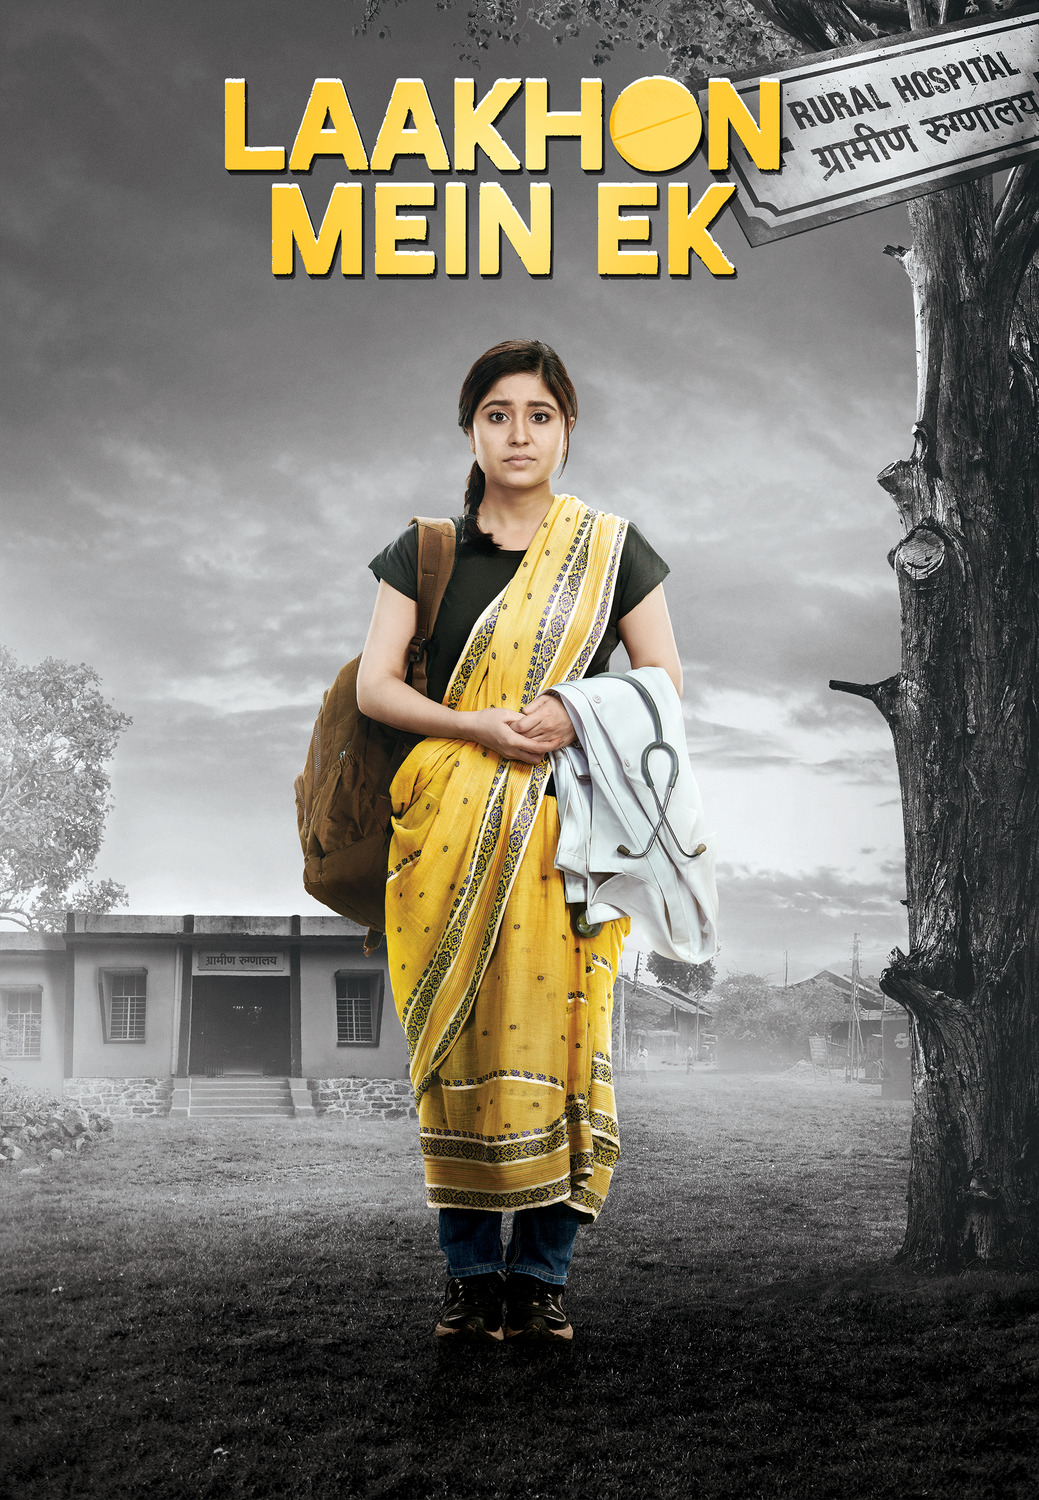 Laakhon Mein Ek (#2 of 2): Extra Large Movie Poster Image - IMP Awards